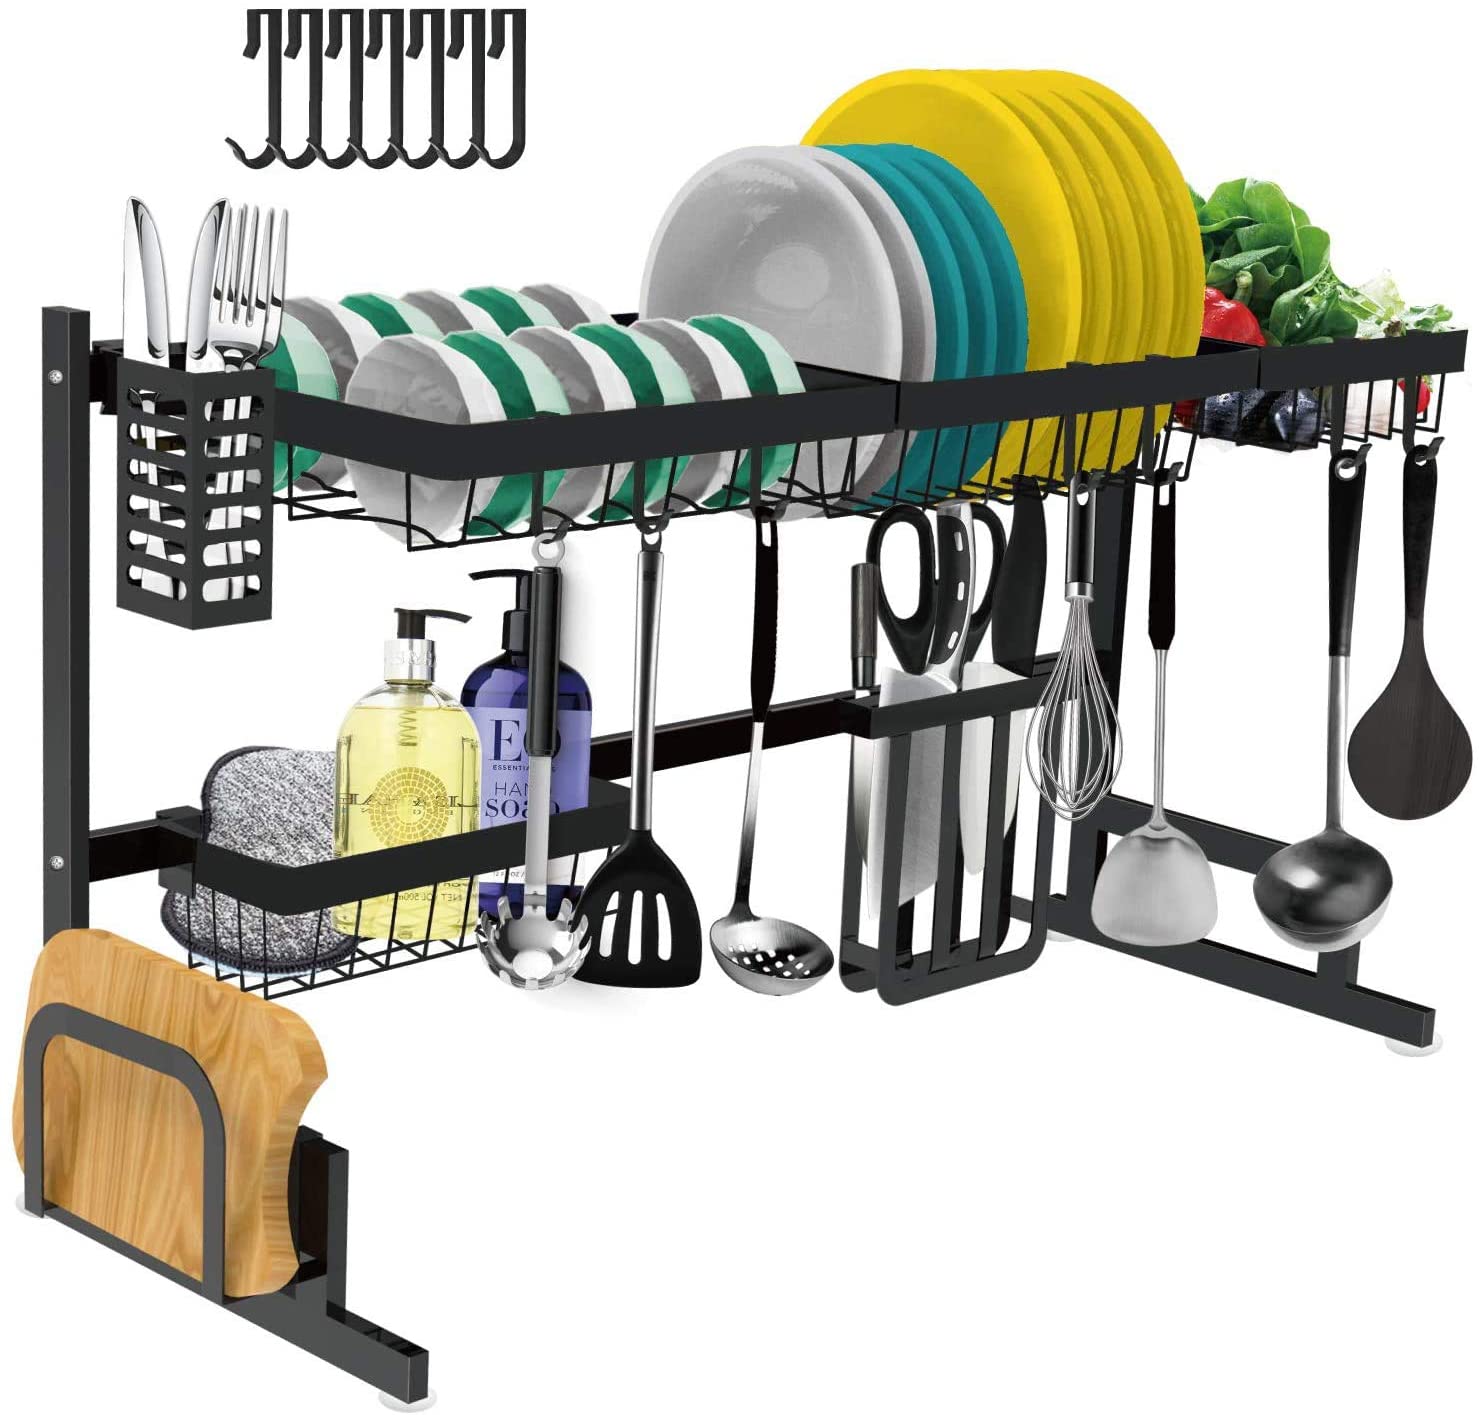 Adjustable Large Dish Rack Drainer for Kitchen Organization Storage Space Apartment Furniture